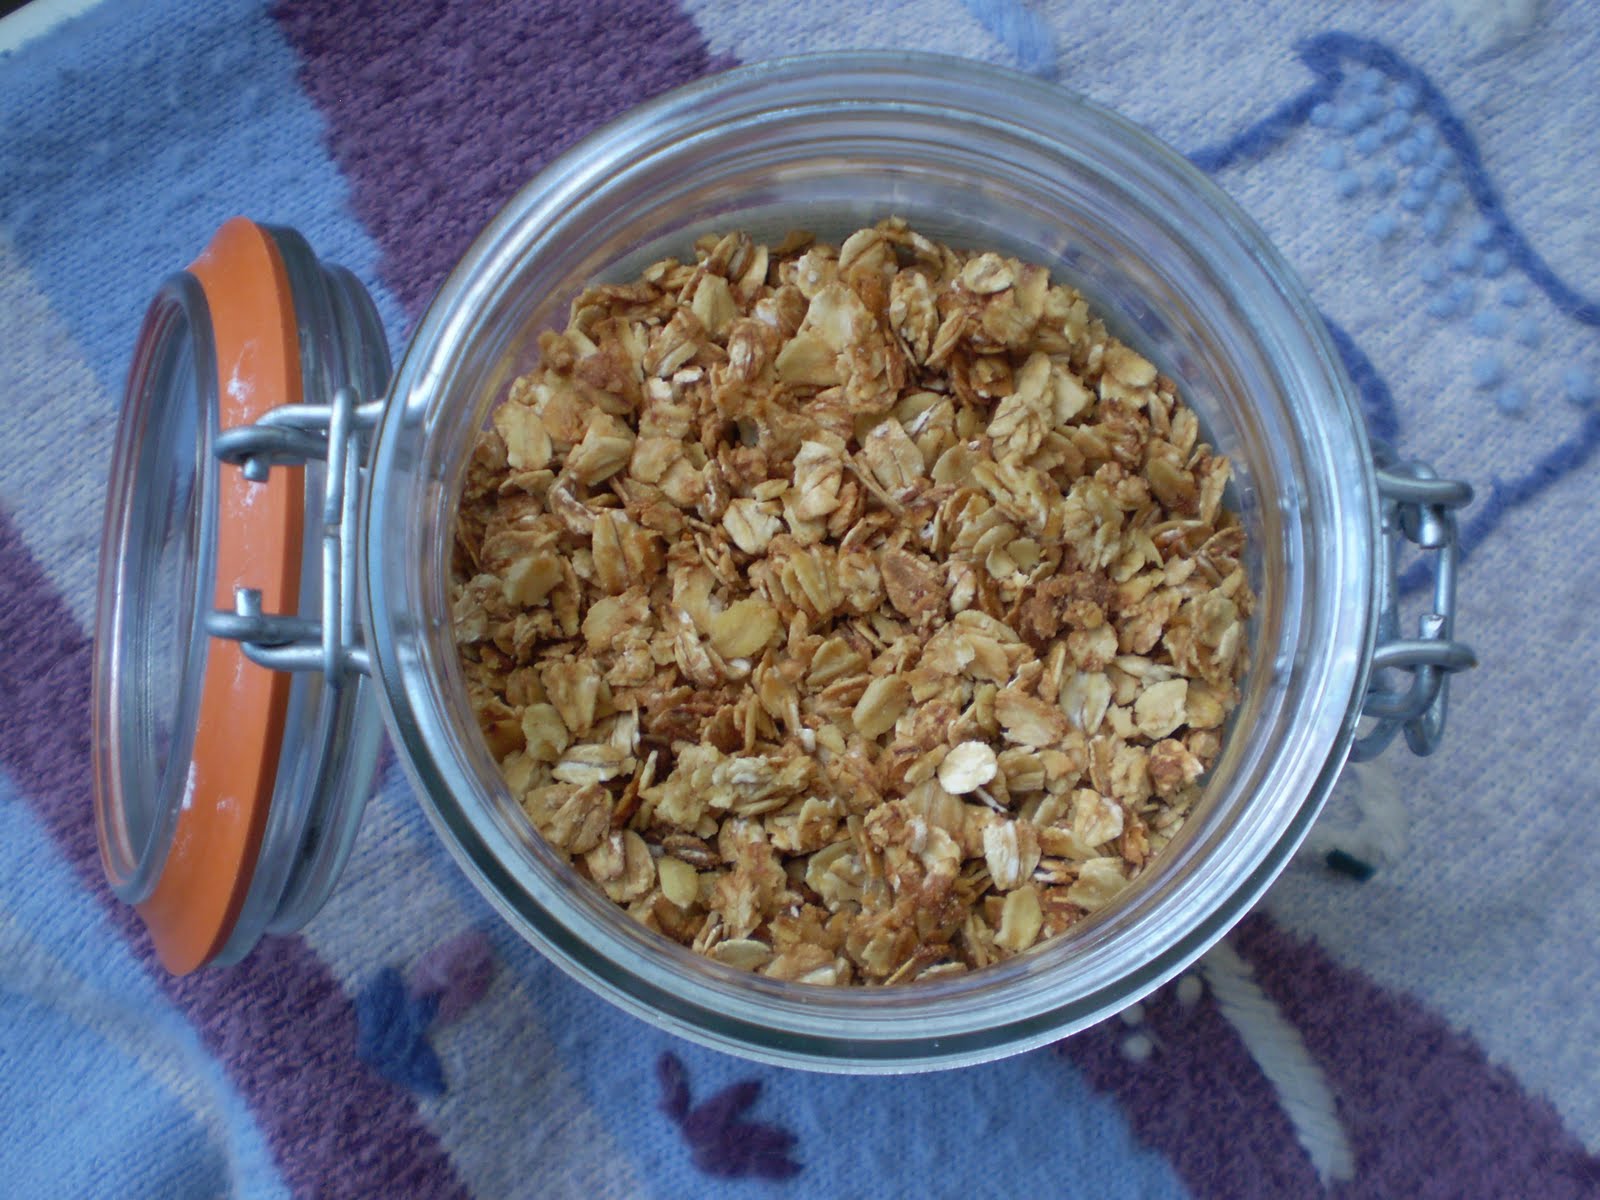 A jar of granola